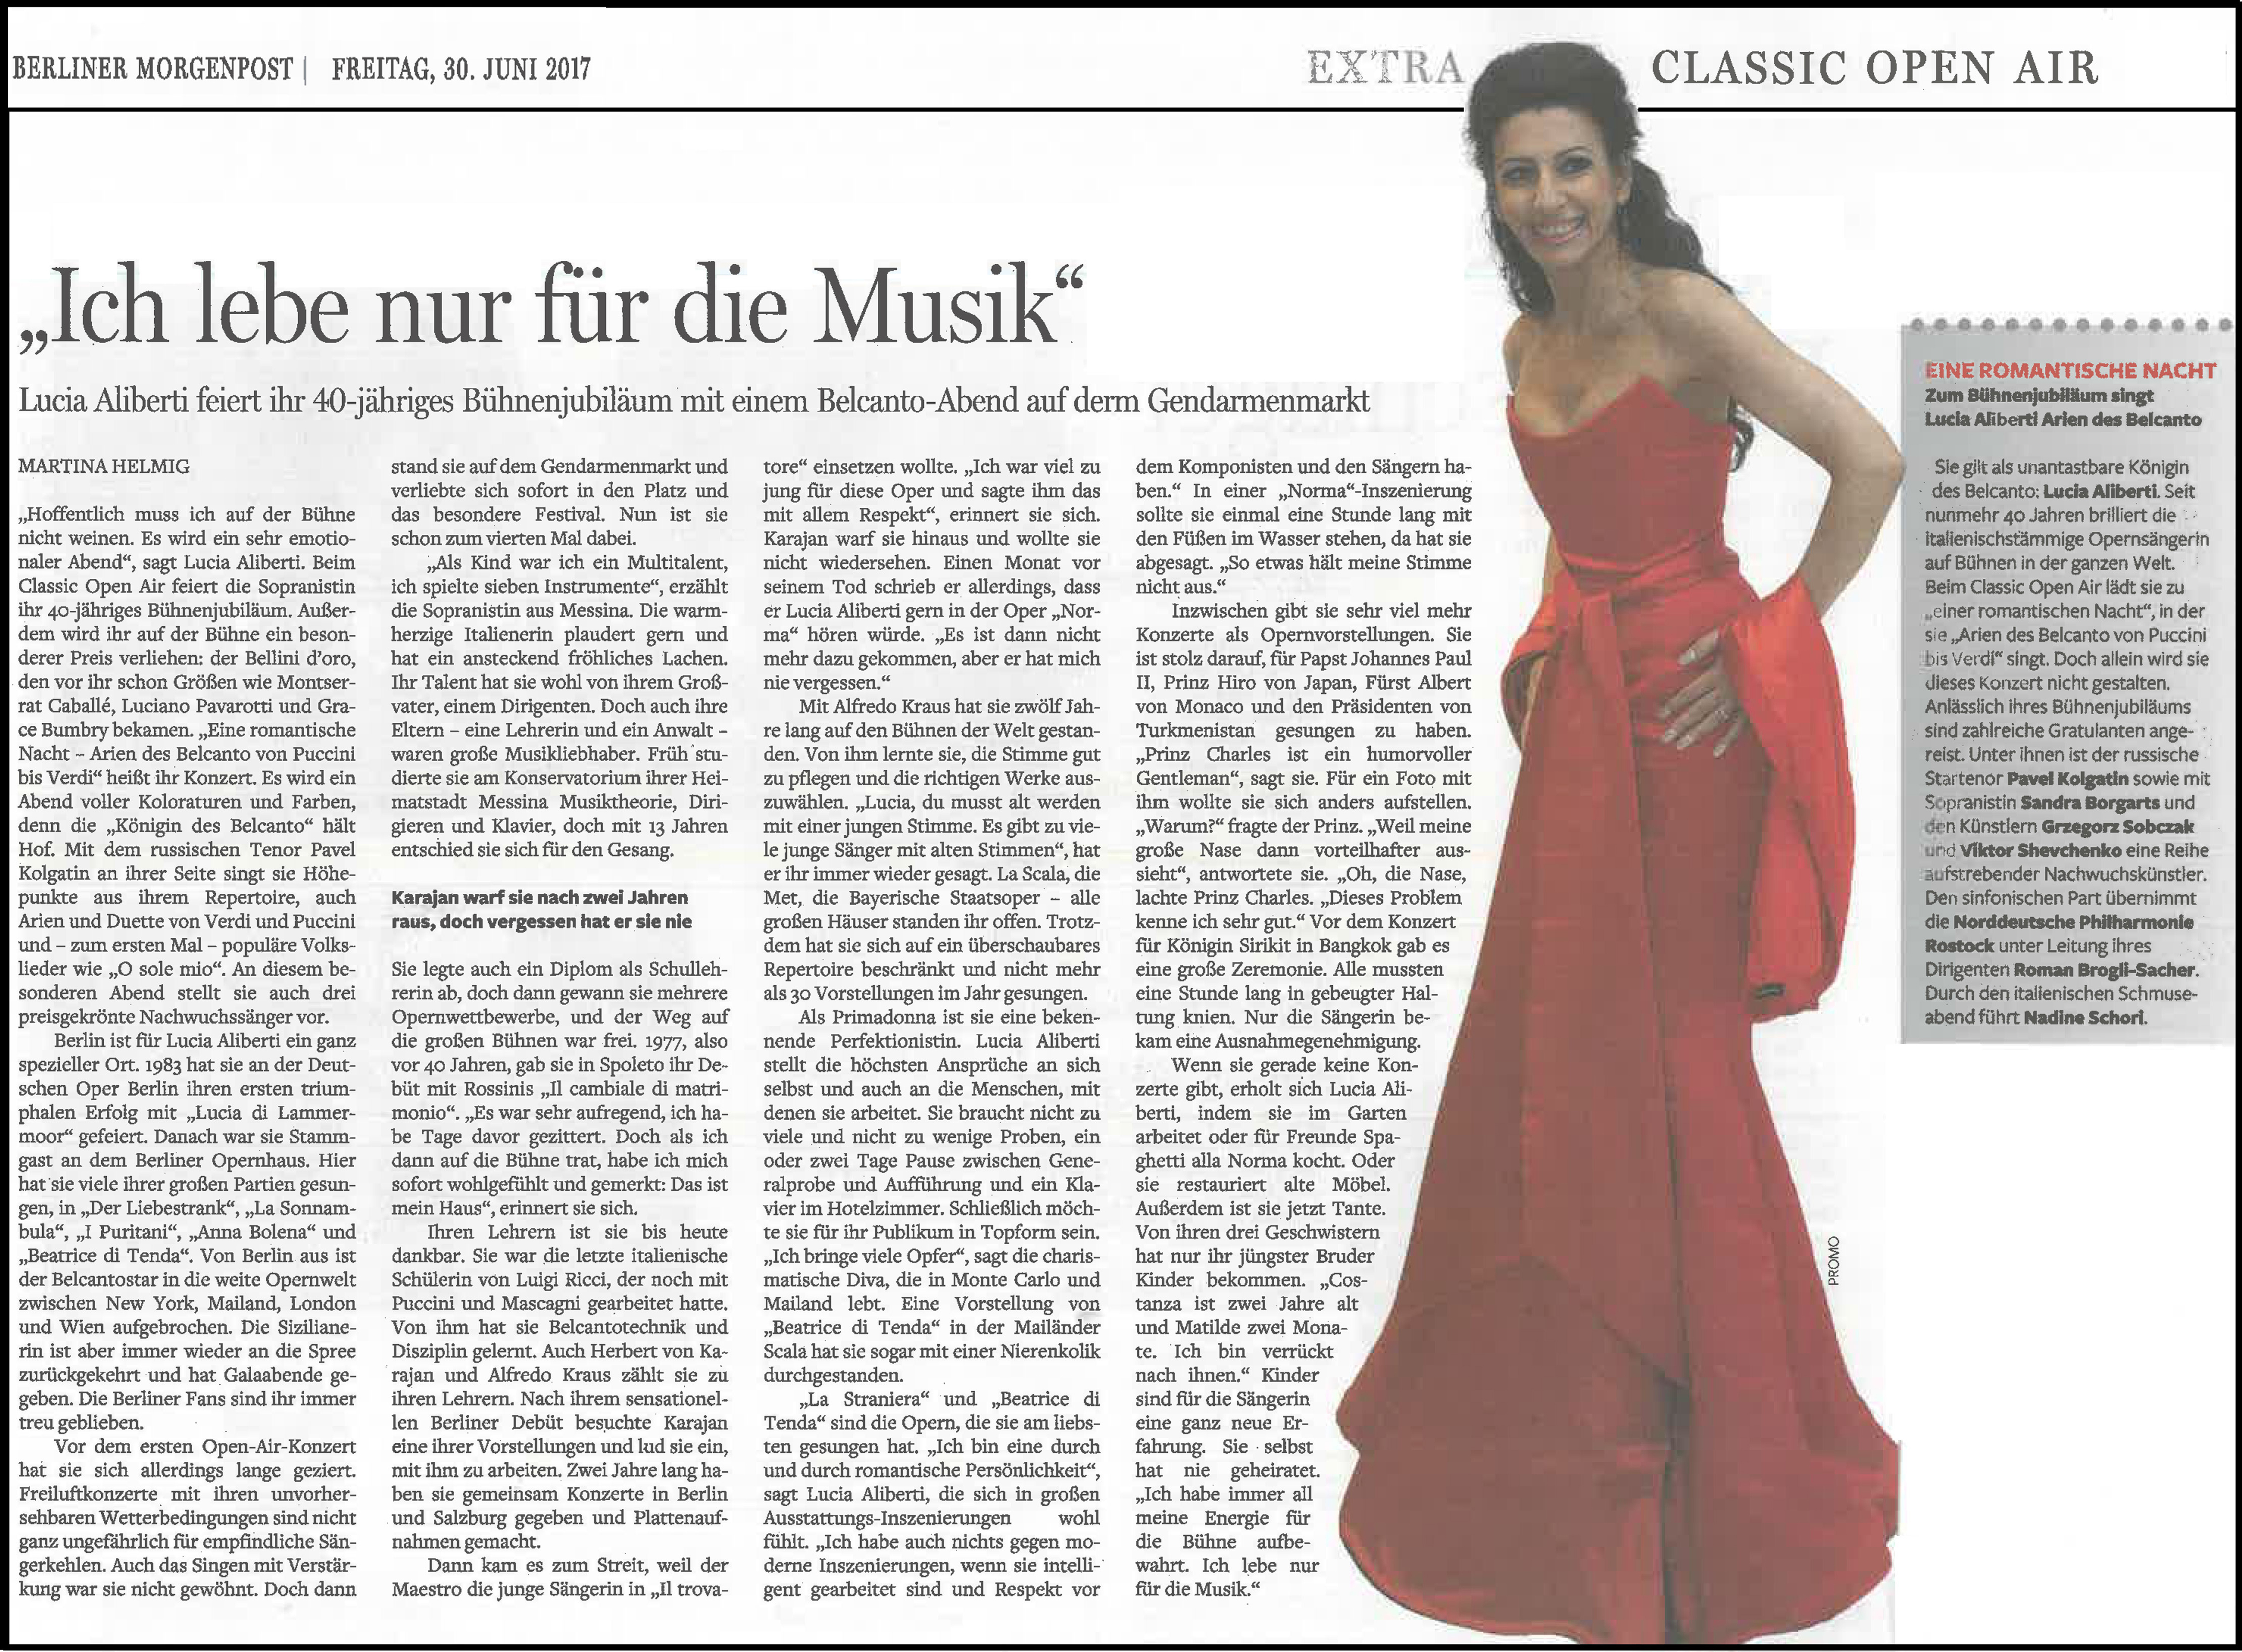 Lucia Aliberti⚘Berliner Morgenpost⚘"Ich lebe nur fur die Musik"⚘Interview⚘Berlin⚘:http://www.luciaaliberti.it #luciaaliberti #berlinermorgenpost #interview #berlin